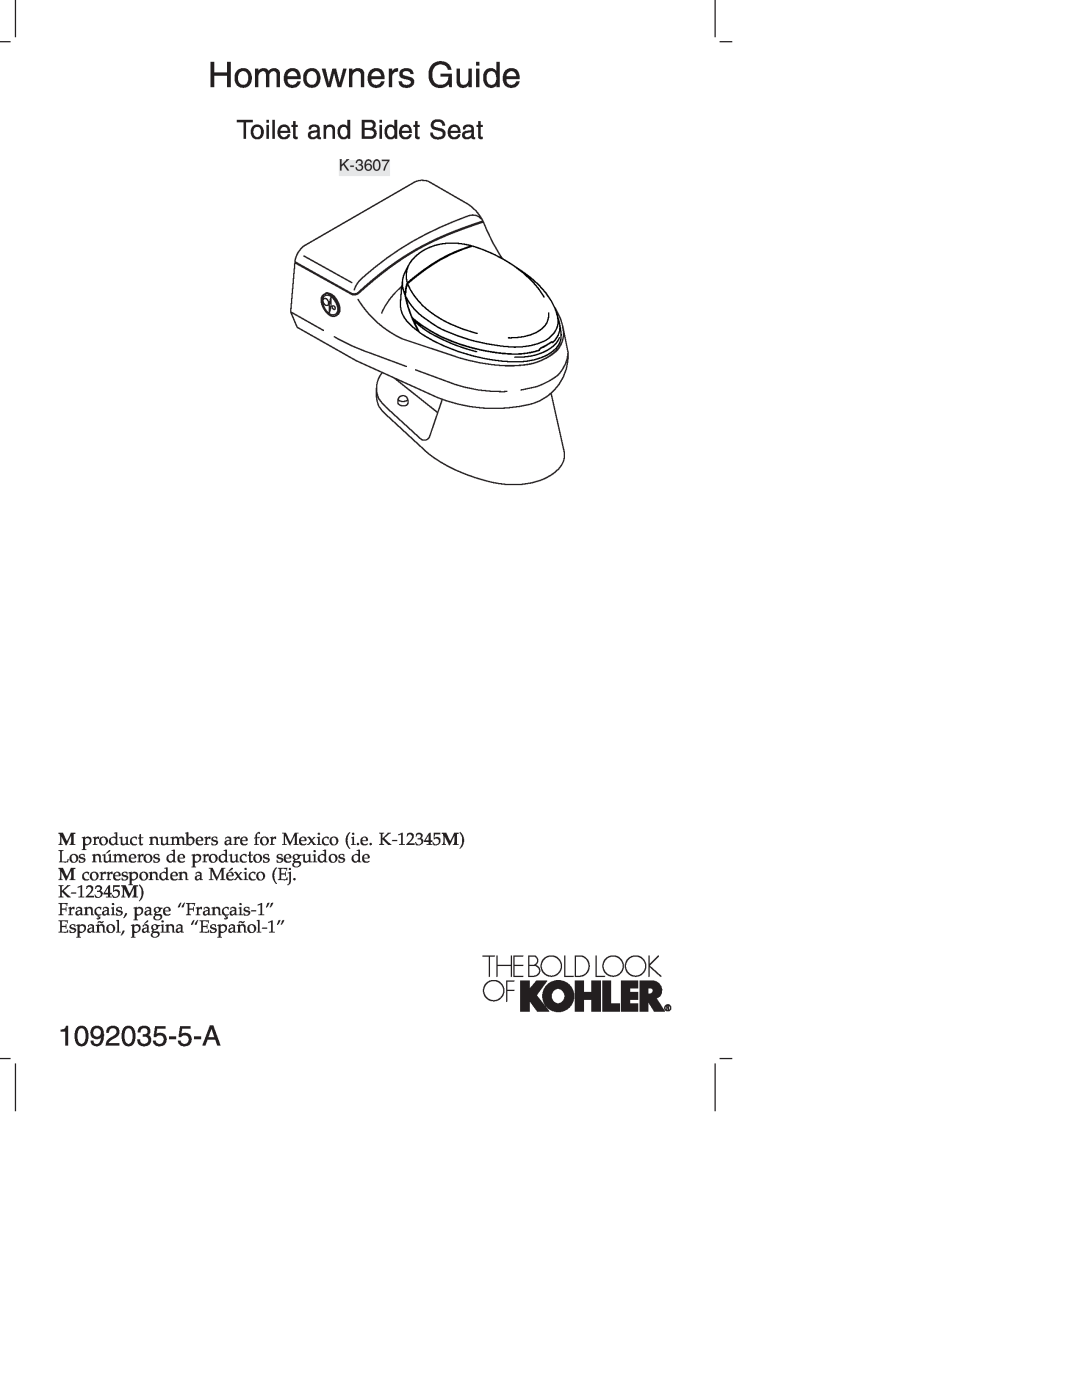 Kohler K-3607 manual 1092035-5-A, Homeowners Guide, Toilet and Bidet Seat 